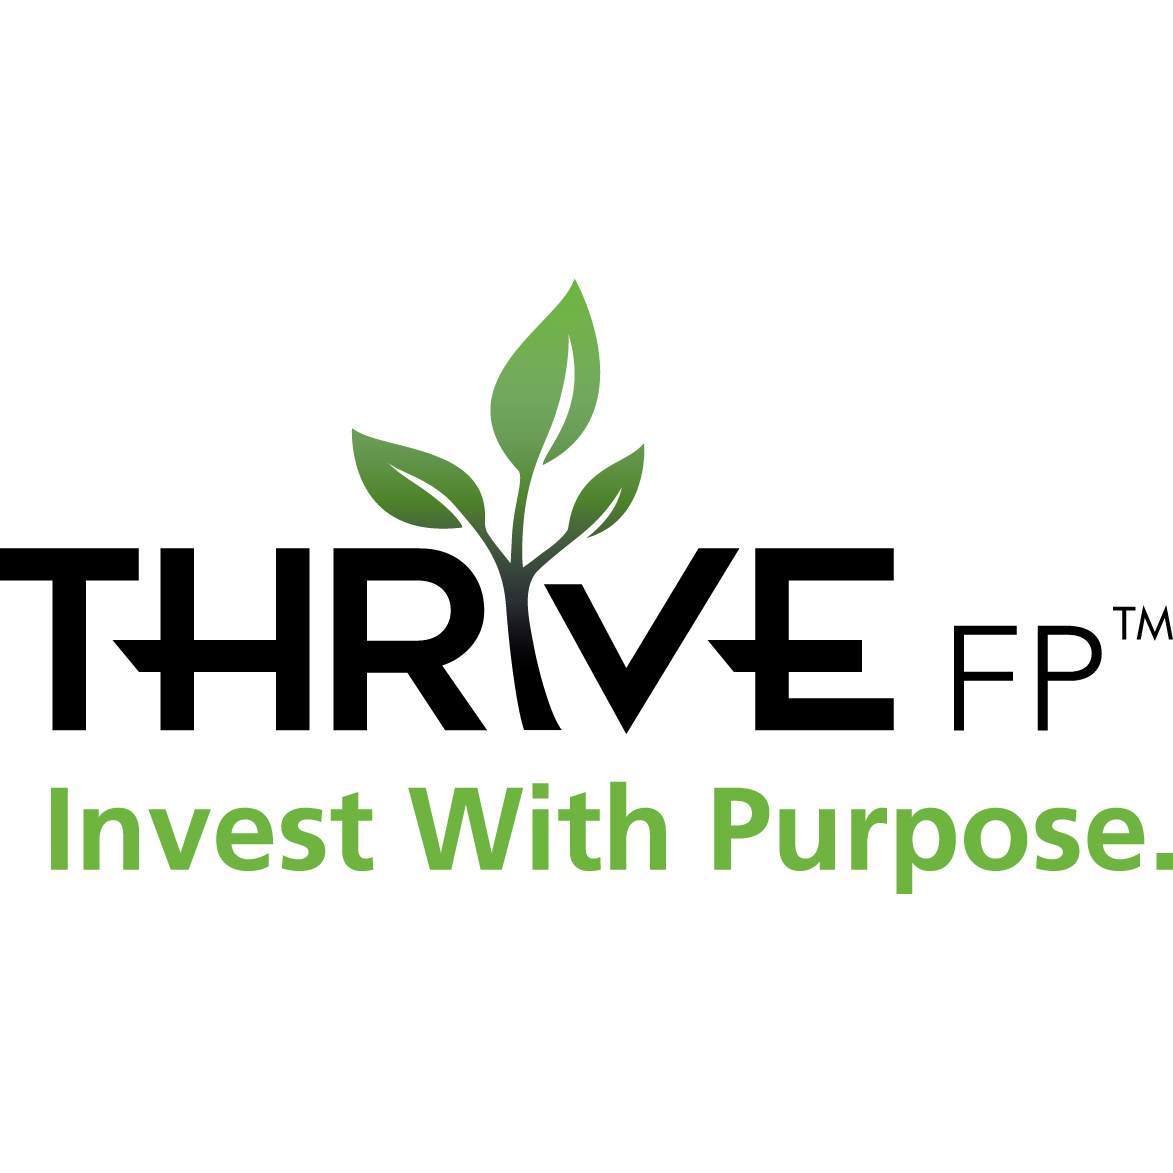 Thrive, FP